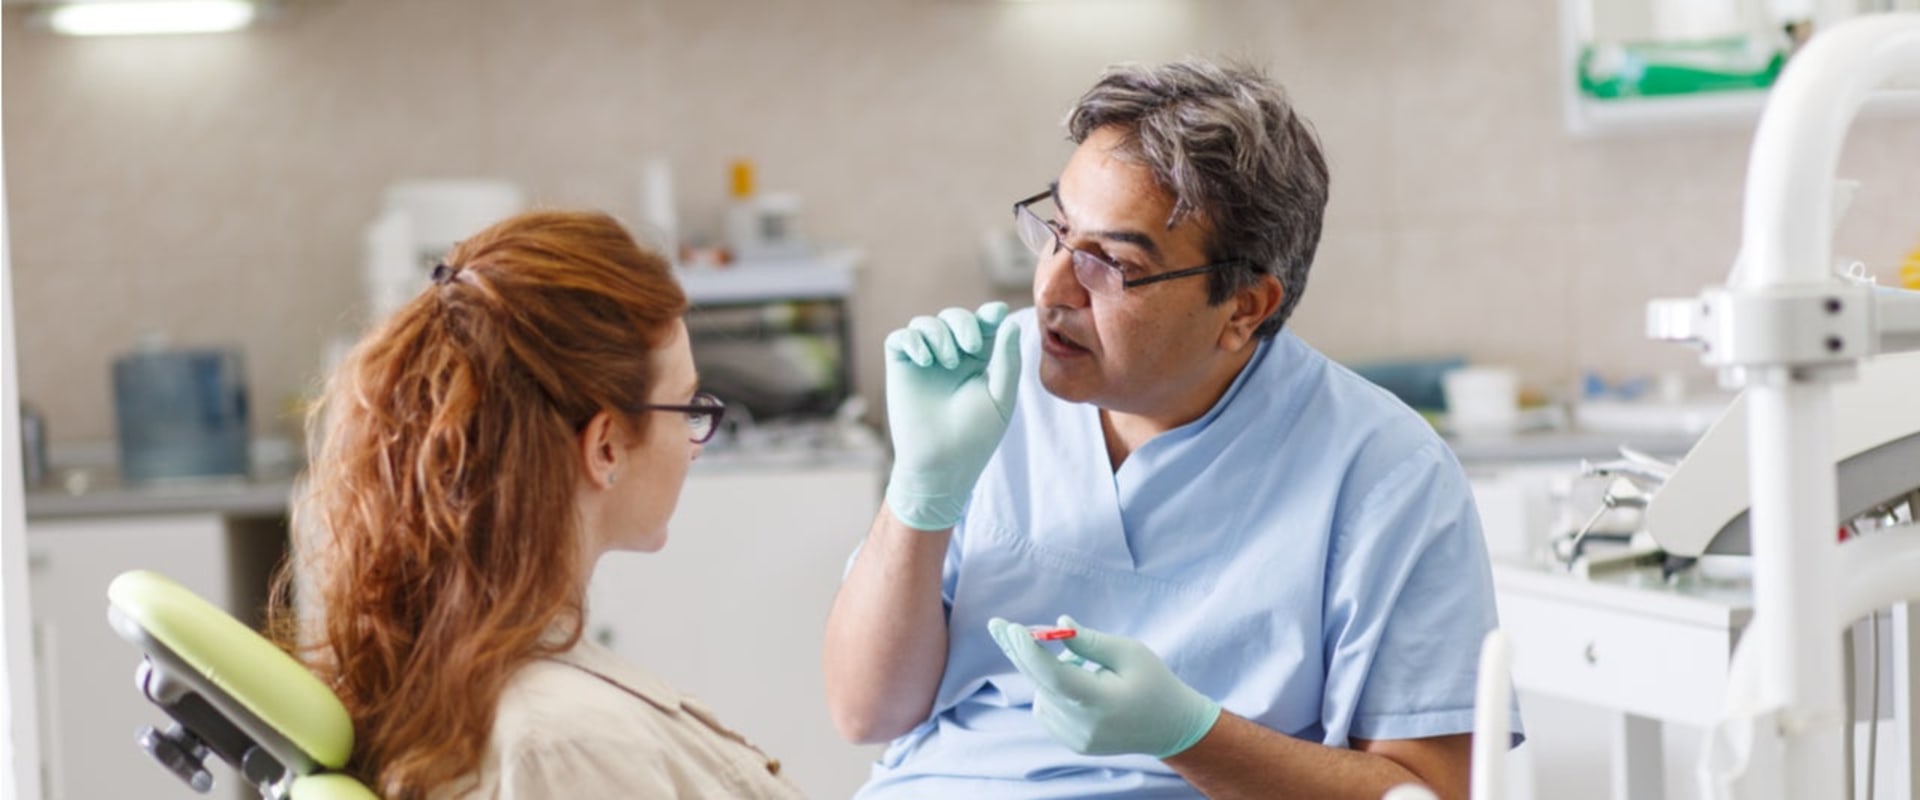 Who Makes More Money: Orthodontist or Dentist?